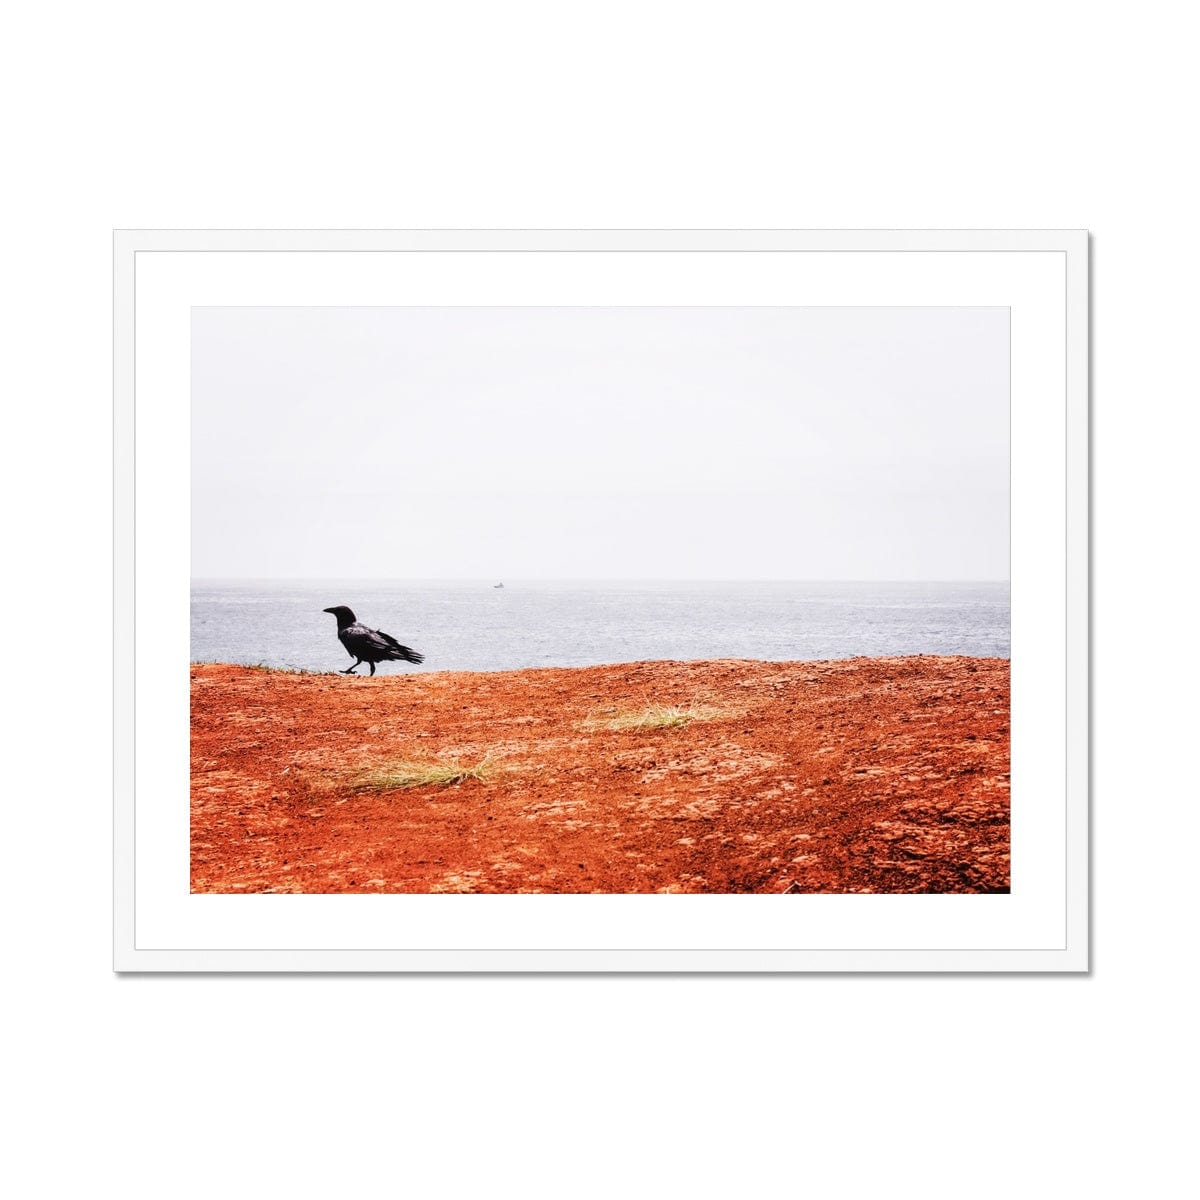 Adam Davies Framed 24"x18" (60.96x45.72cm) / White Frame Black Crow Framed & Mounted Print